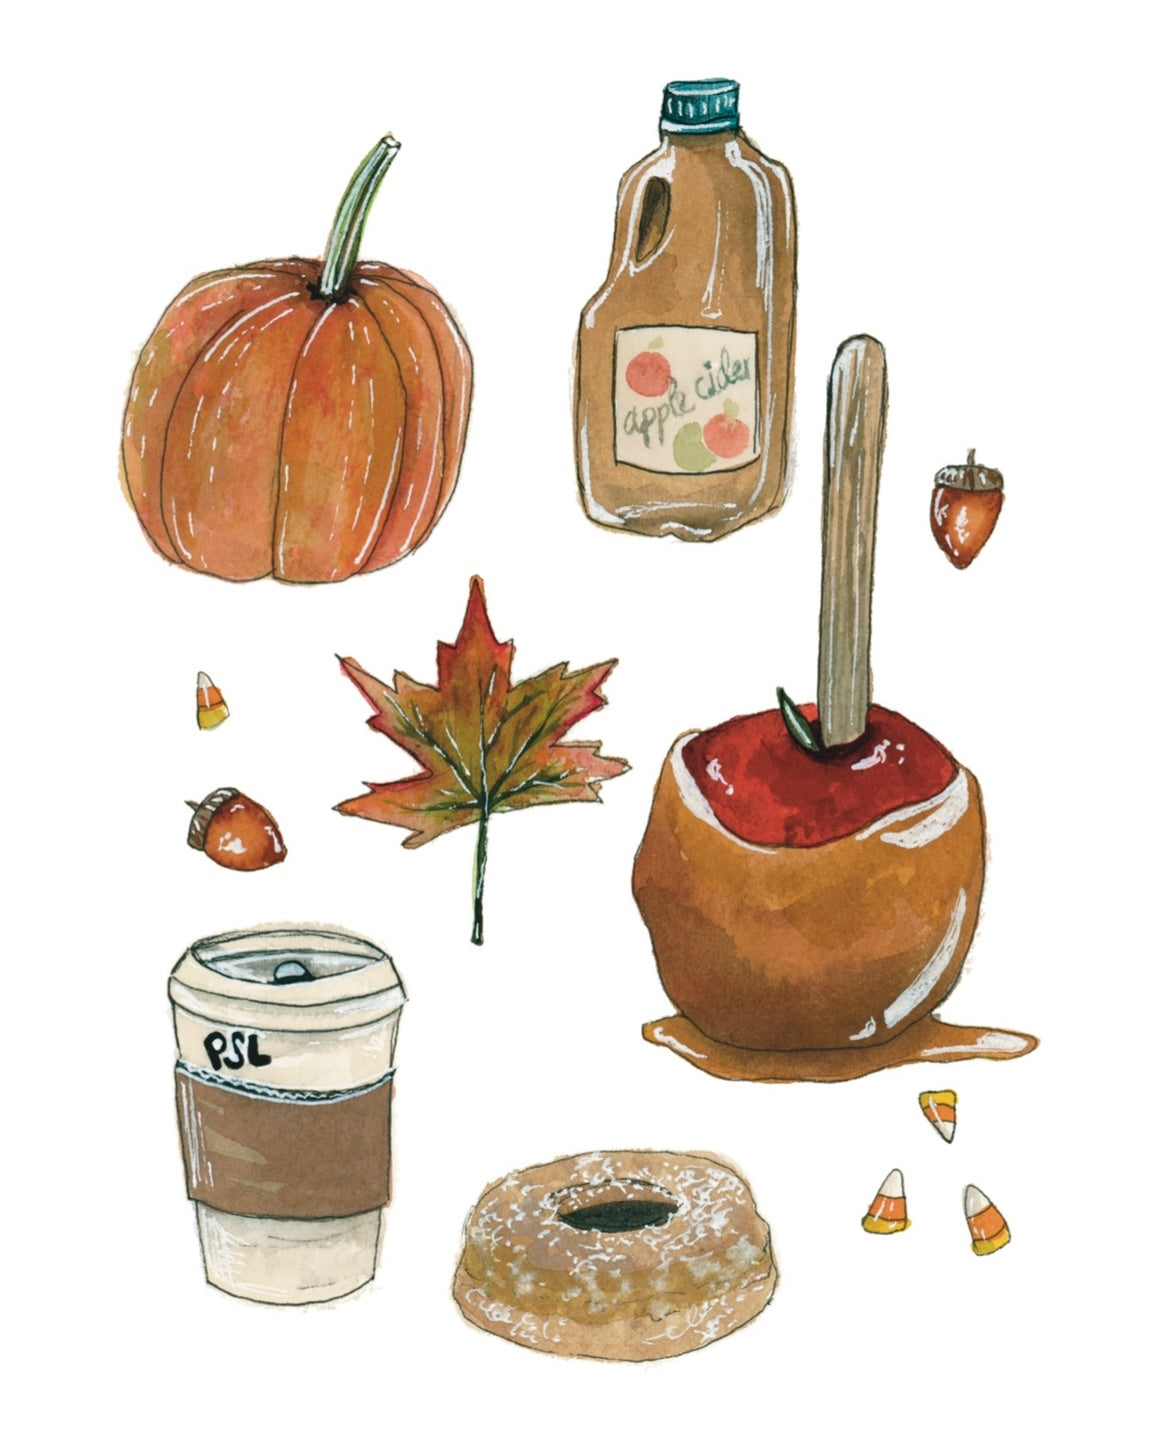 Fall Art Print- Pumpkin Spice and Autumn Sweets